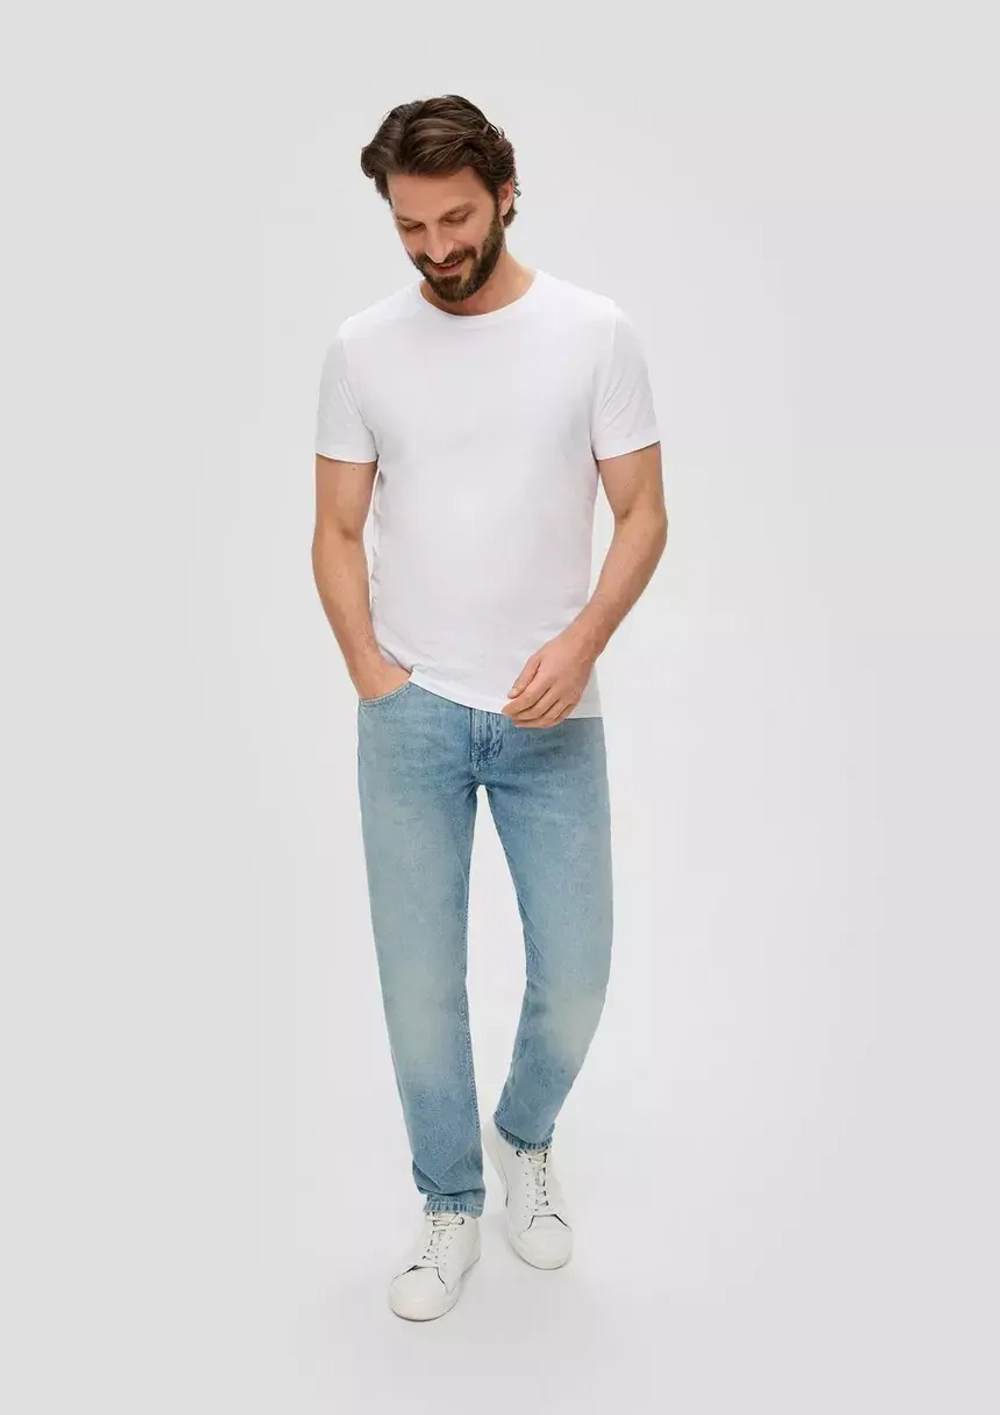 Джинсы Jeans Mauro / Regular Fit / High Rise / Tapered Leg s.Oliver